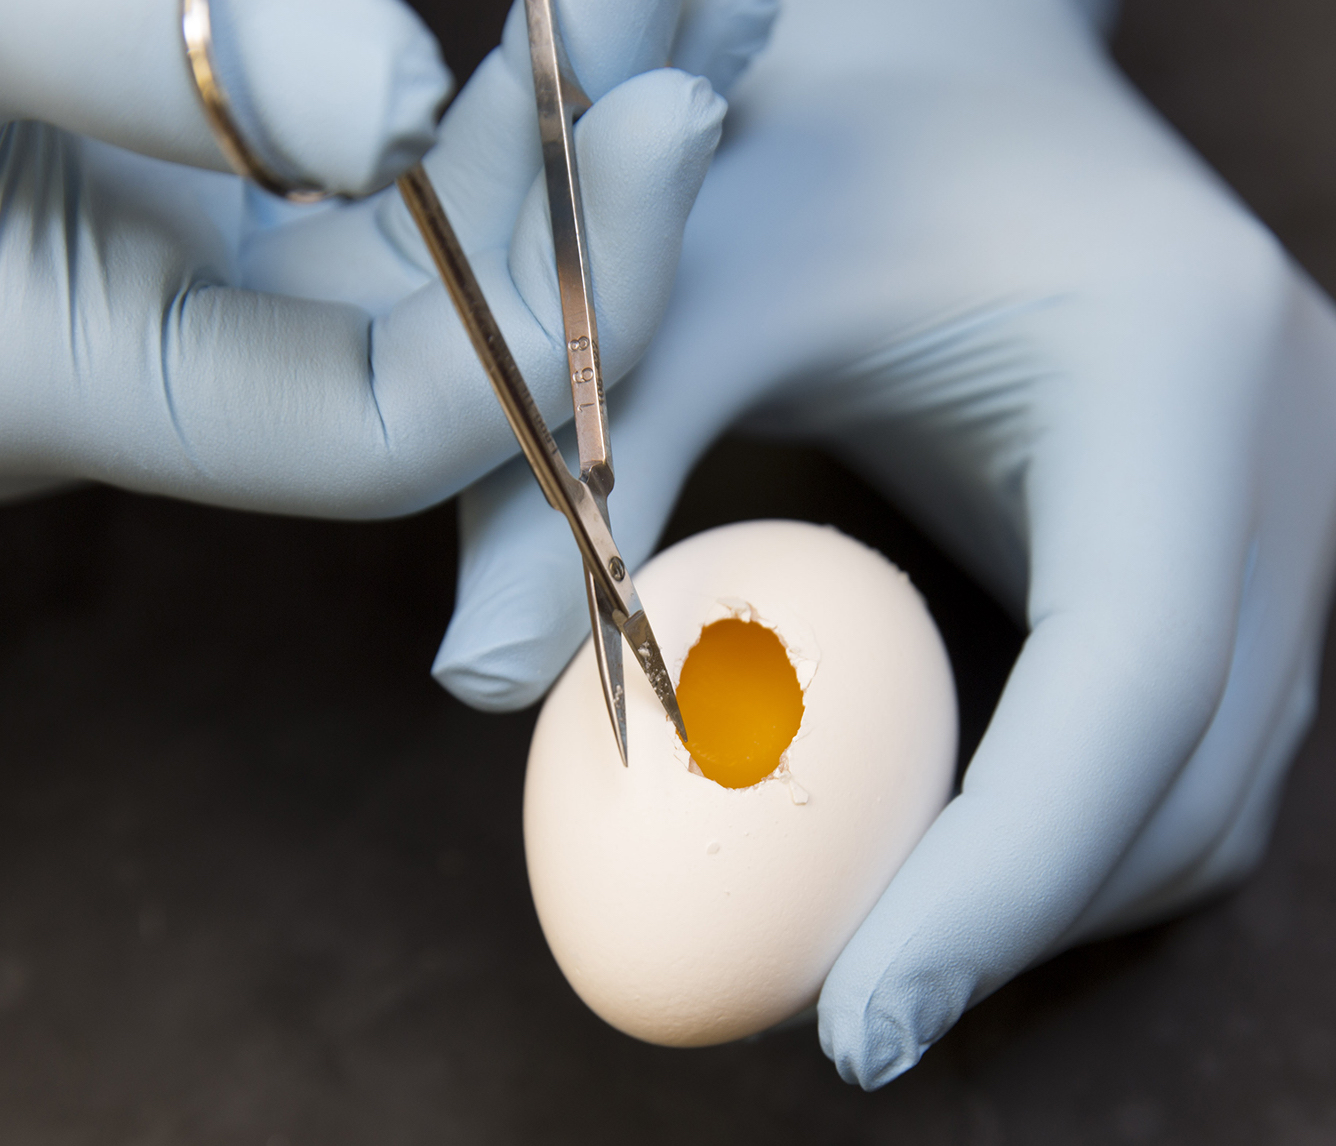 Forrest Goodfellow, a graduate student in University of Georgia's Regenerative Bioscience Center, cuts into a chicken egg.